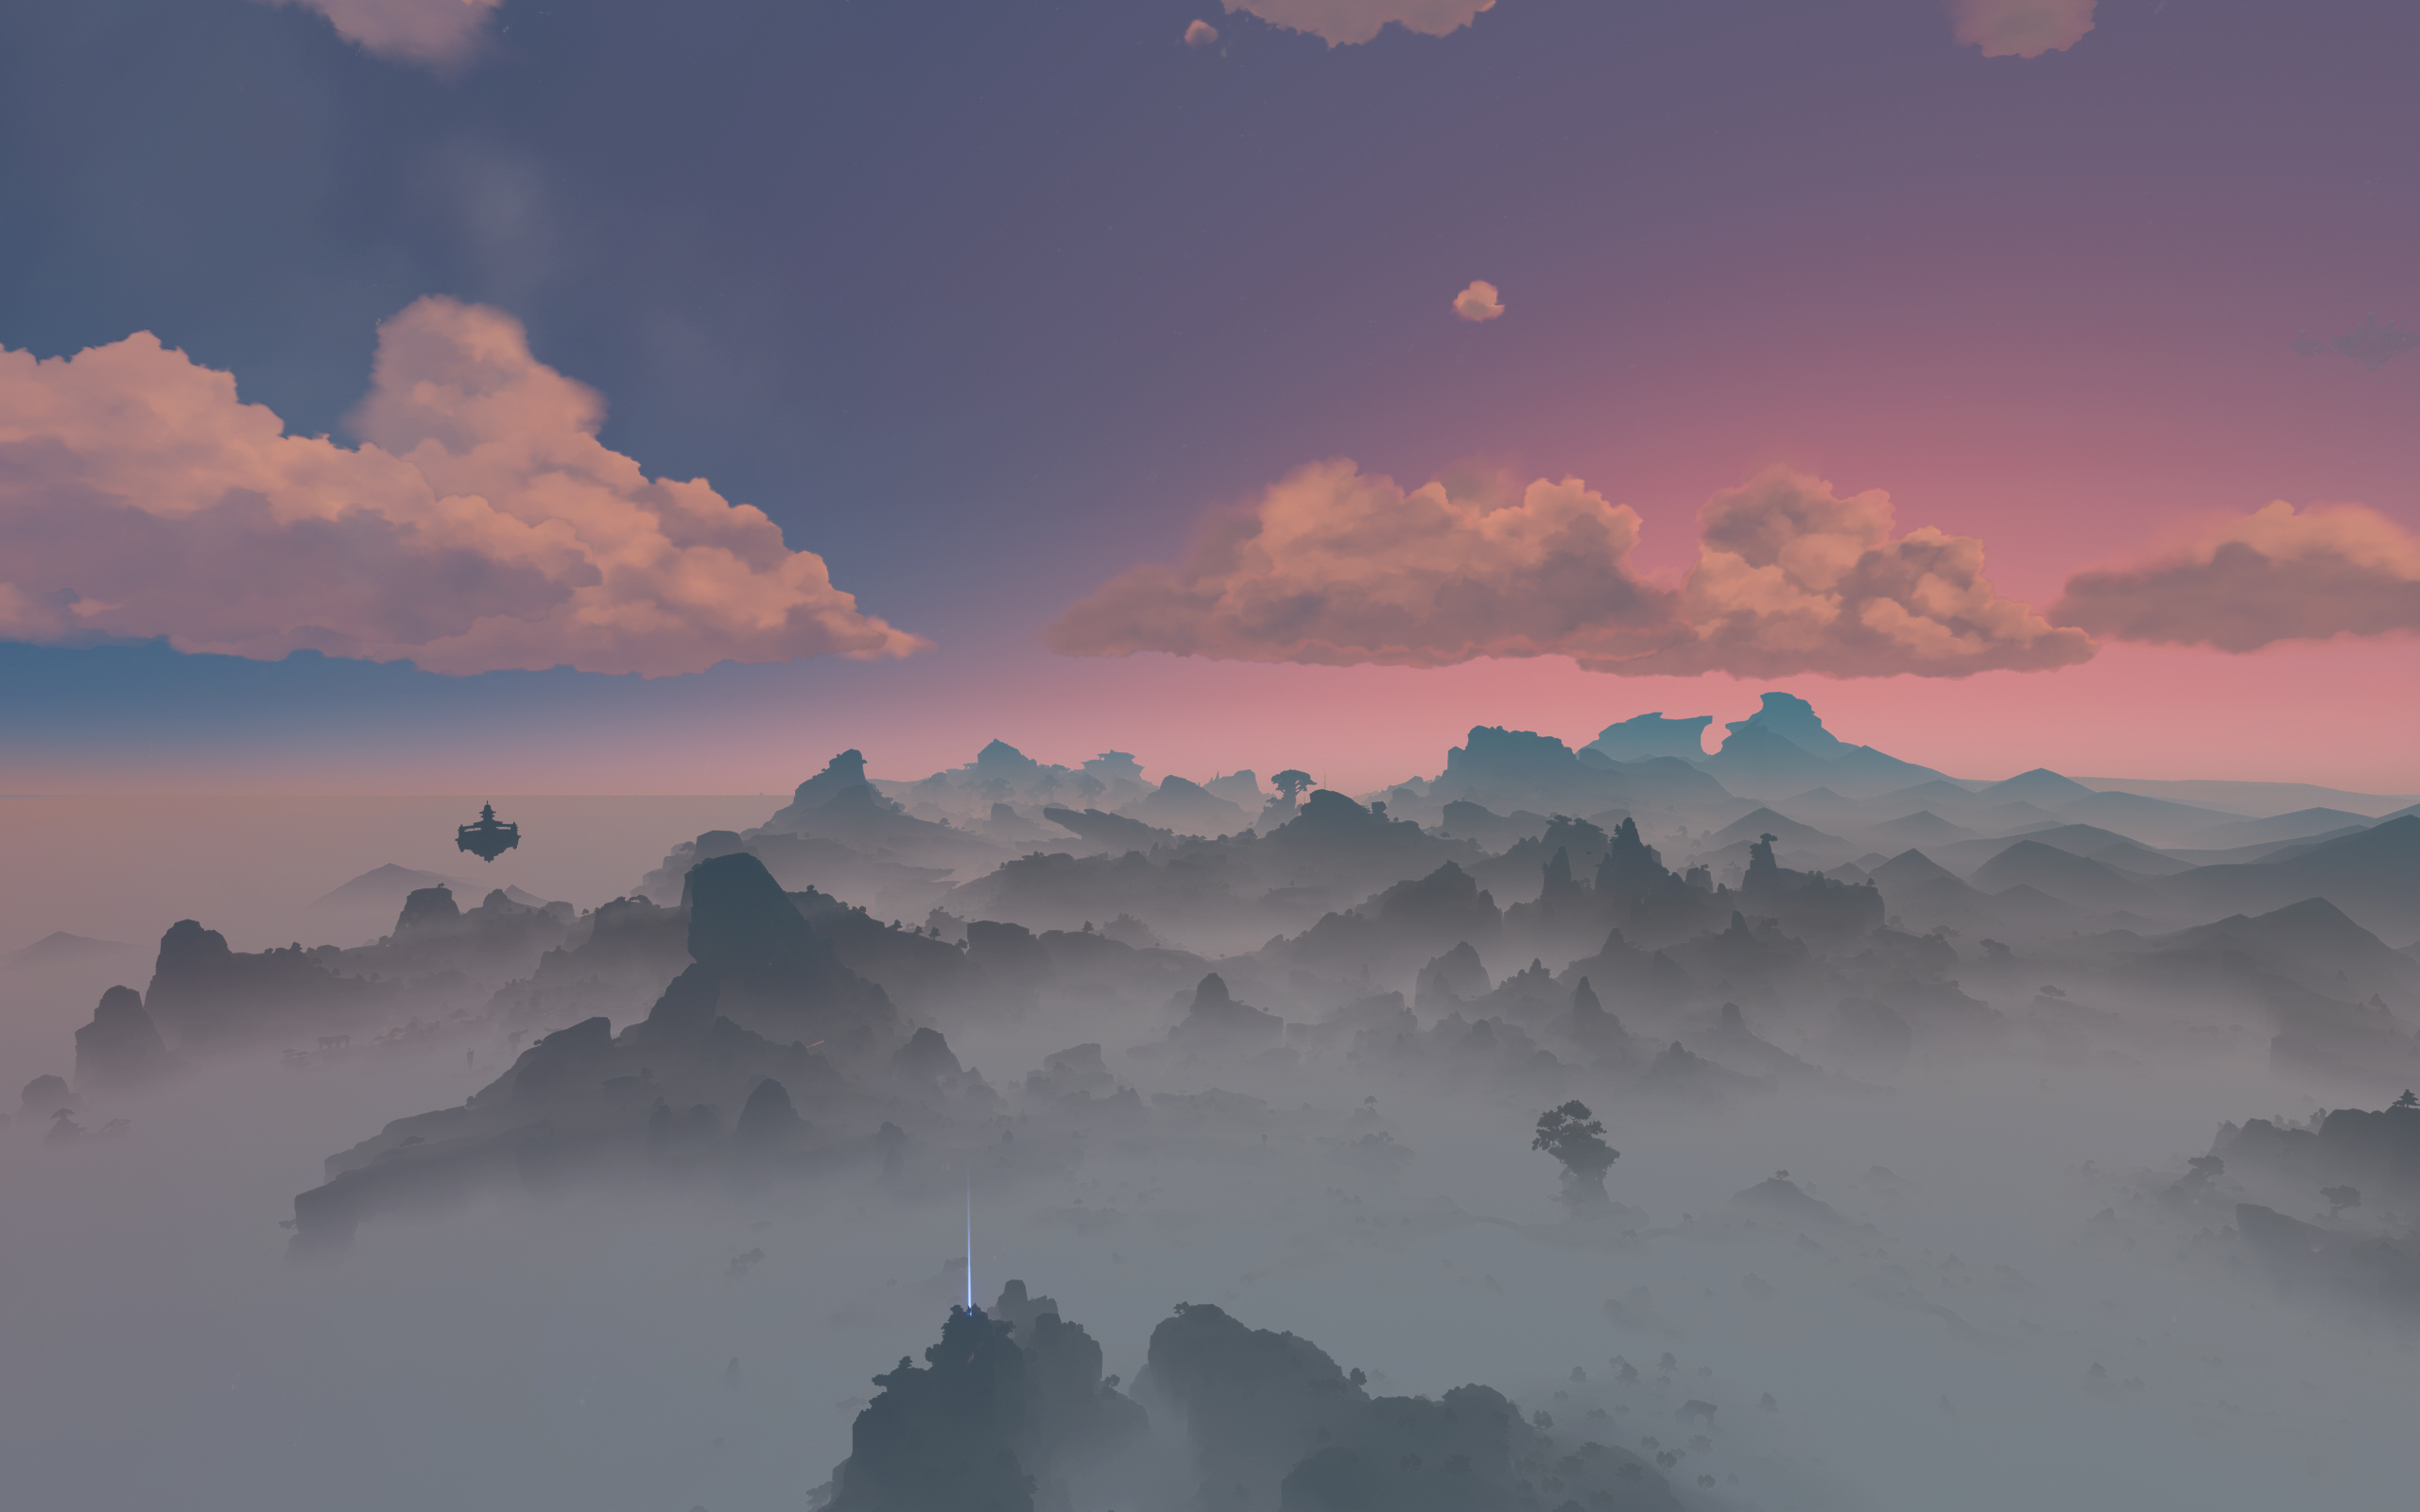 Genshin Impact Anime Sky Clouds Dusk Sunset Screenshot Of The Game Mist Mountains 2560x1600